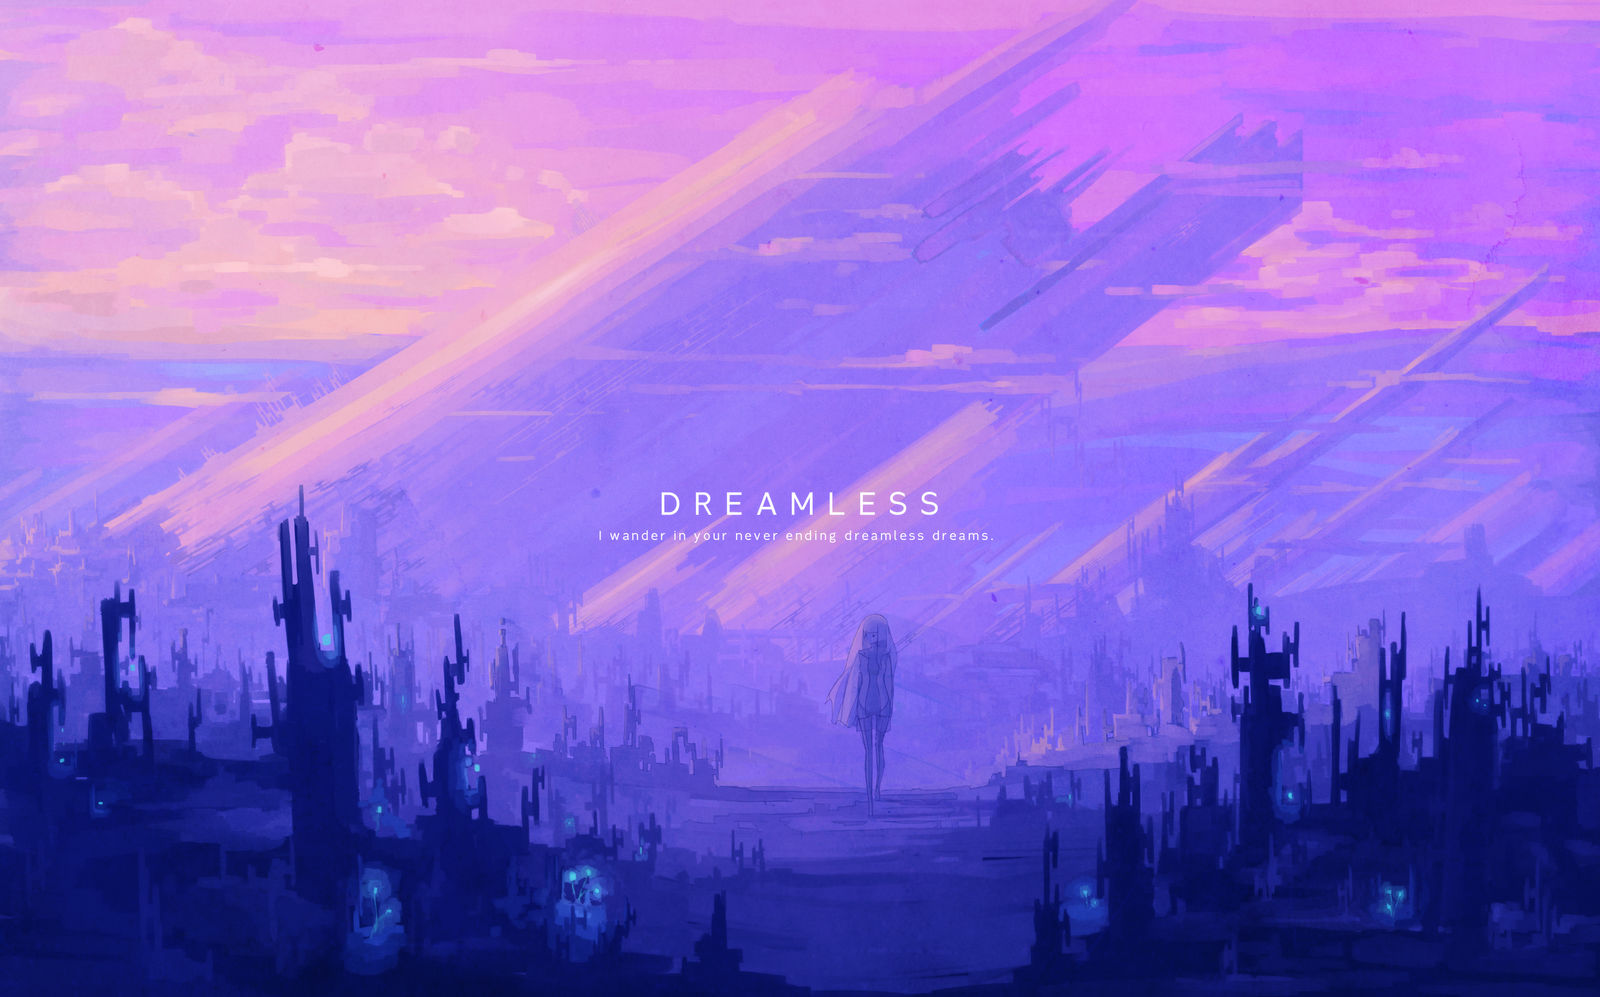 DREAMLESS